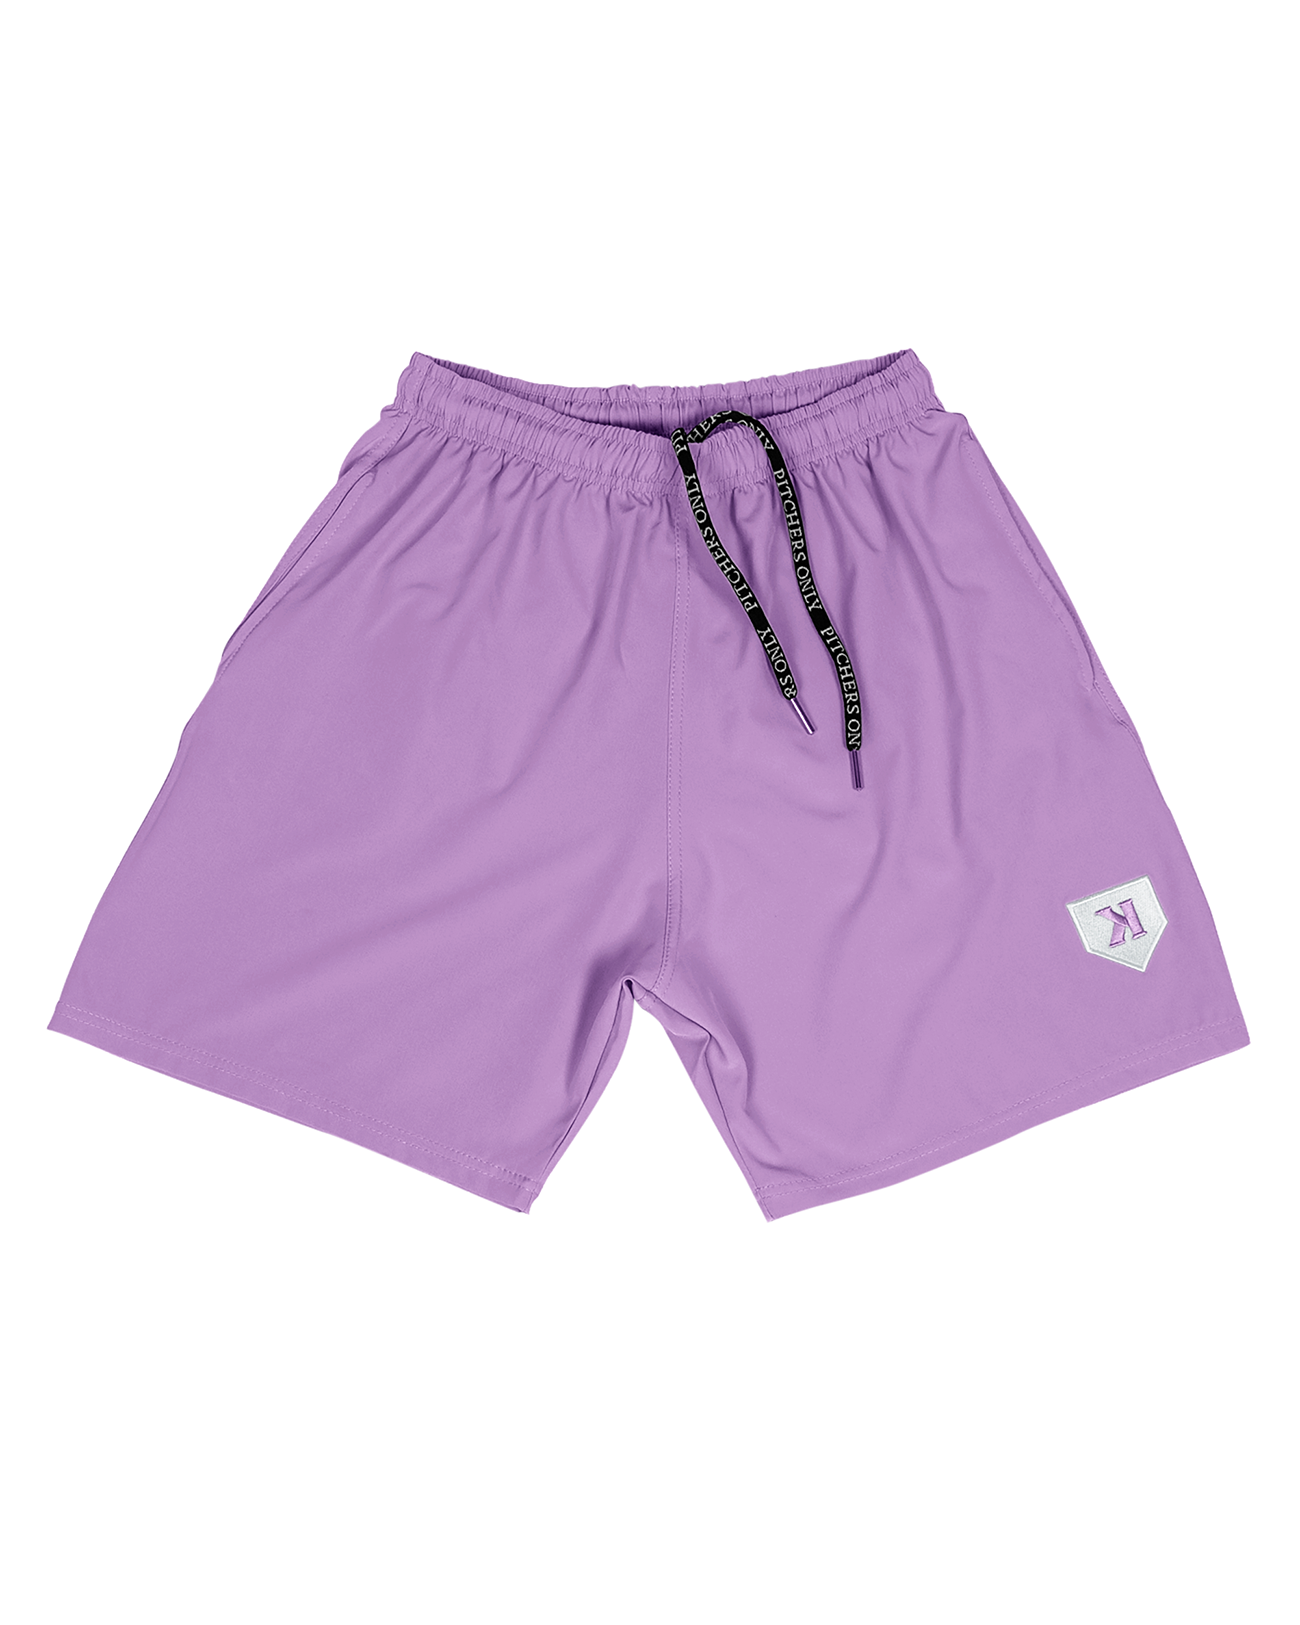 Lavender Training Shorts